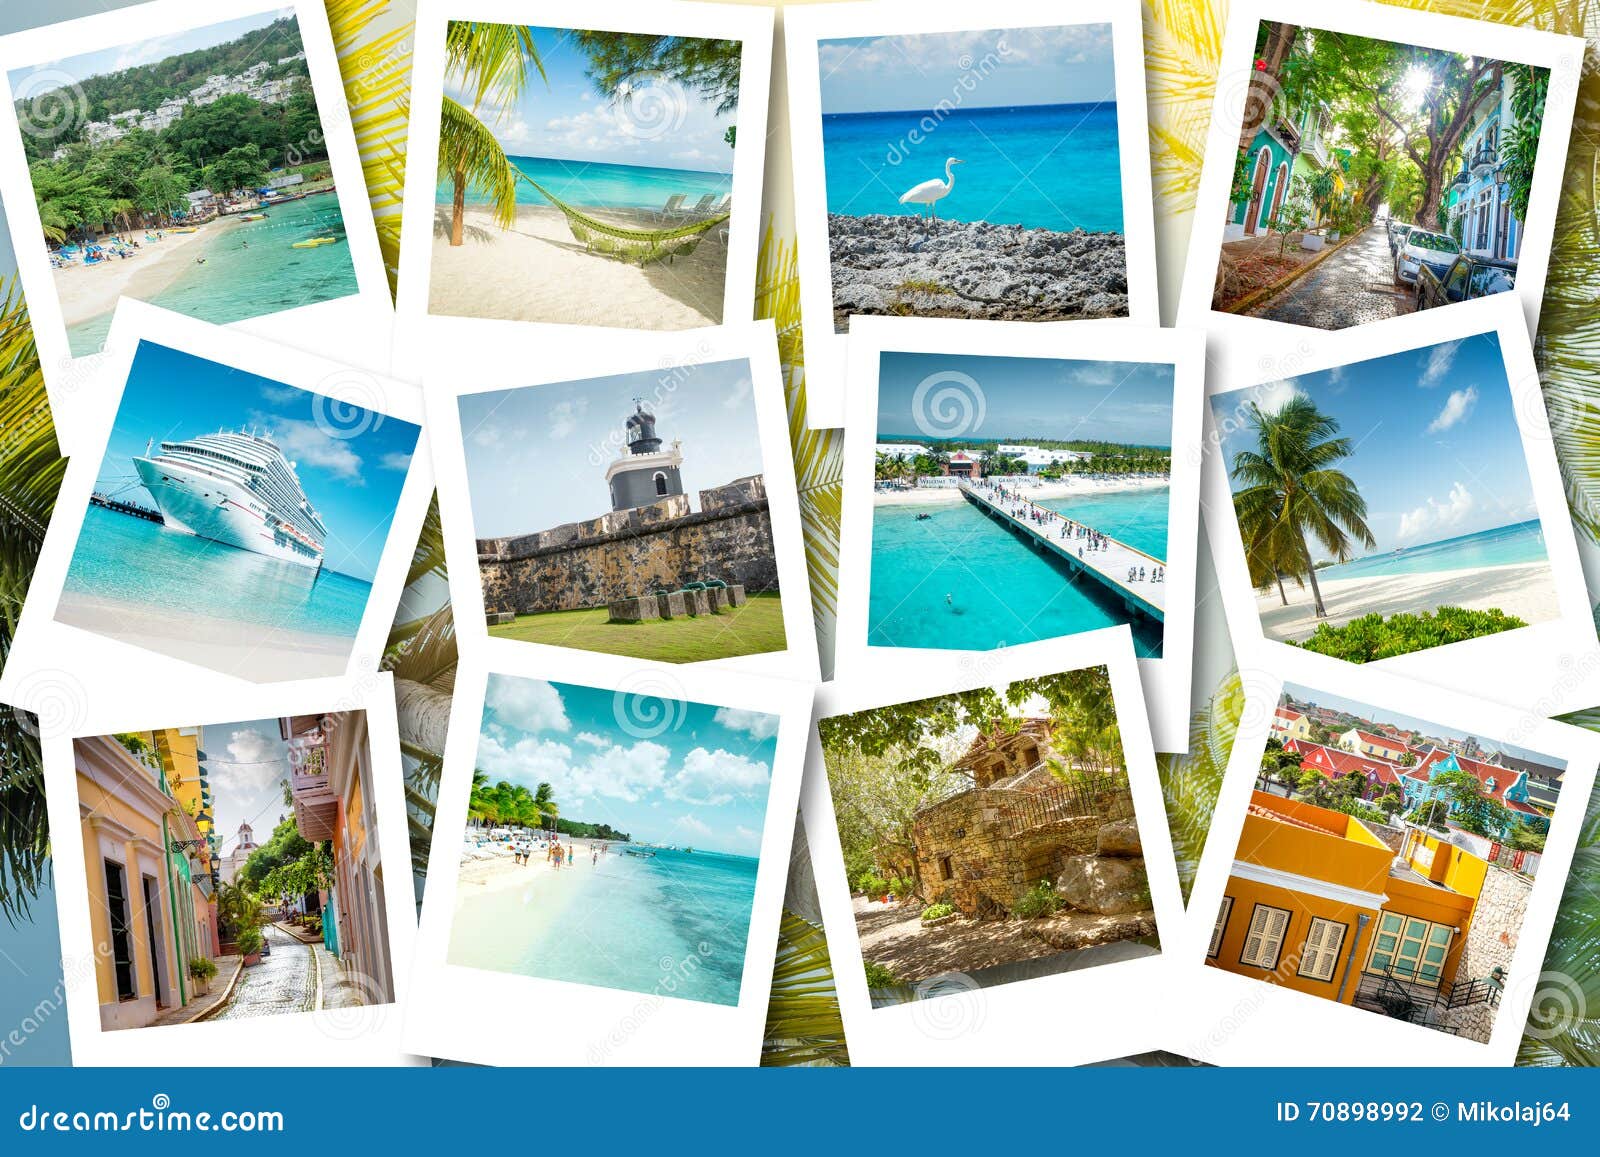 cruise memories on polaroid photos - summer caribbean vacations